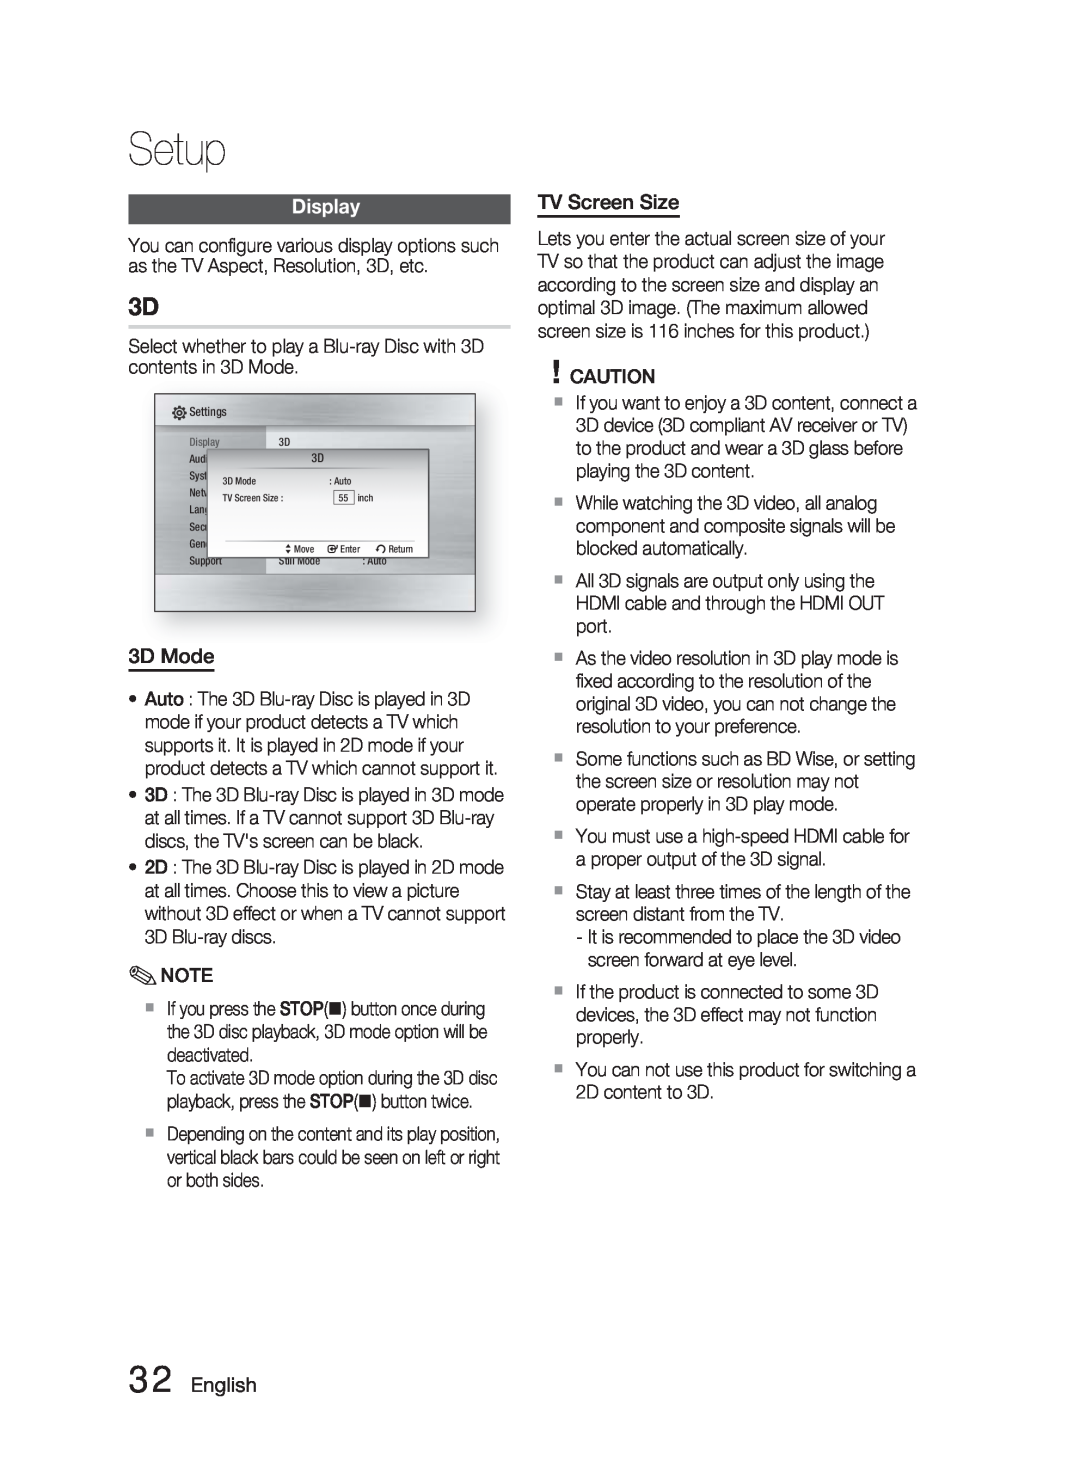 Samsung HT-C6900W user manual Display, 3D Mode, TV Screen Size, English, Setup 